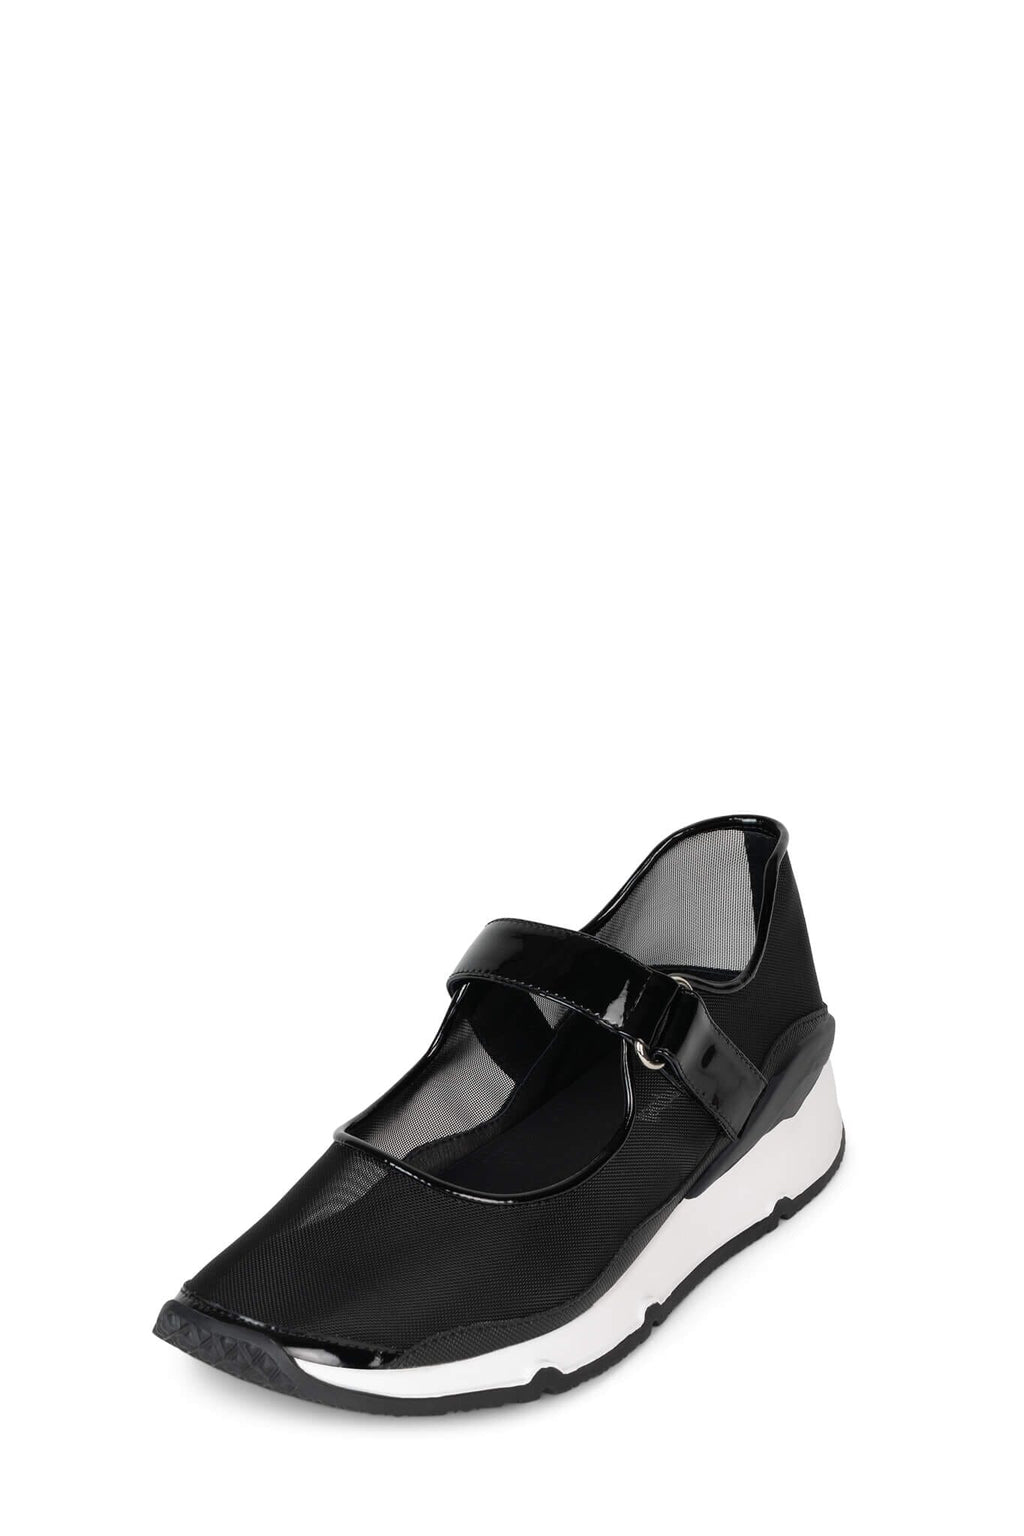 KICKS-MSH Jeffrey Campbell Sneakers Black Mesh Black Patent